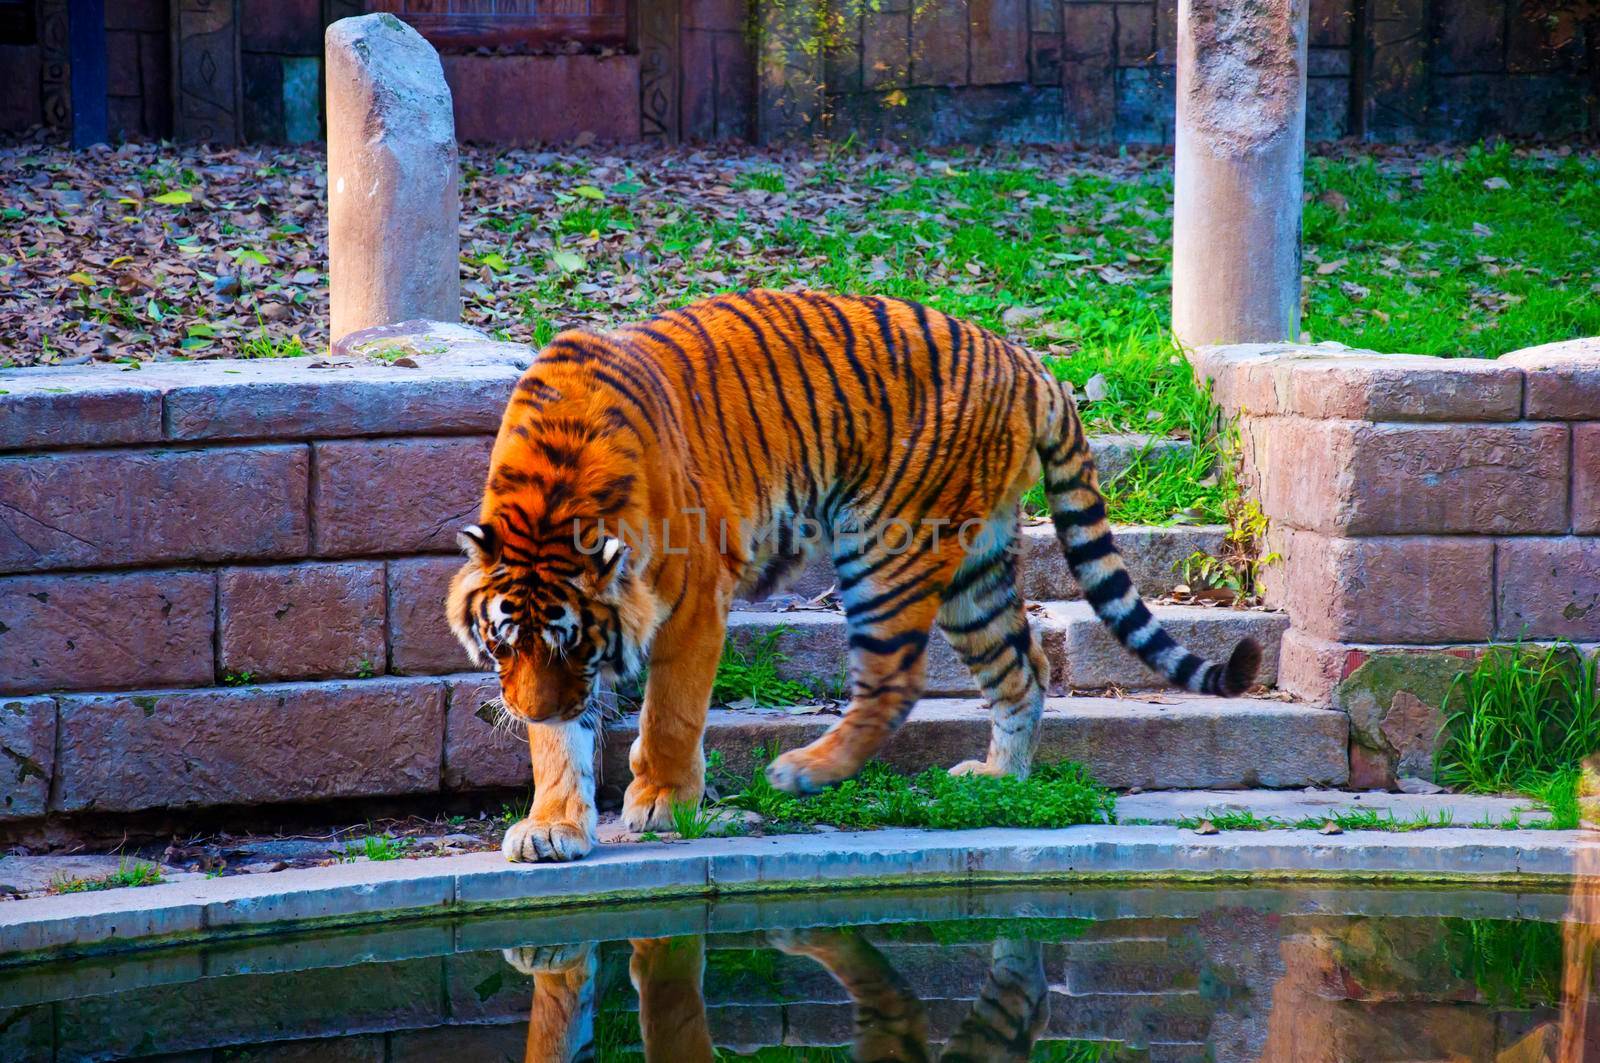 Big tiger near the pond, autumn, Spain